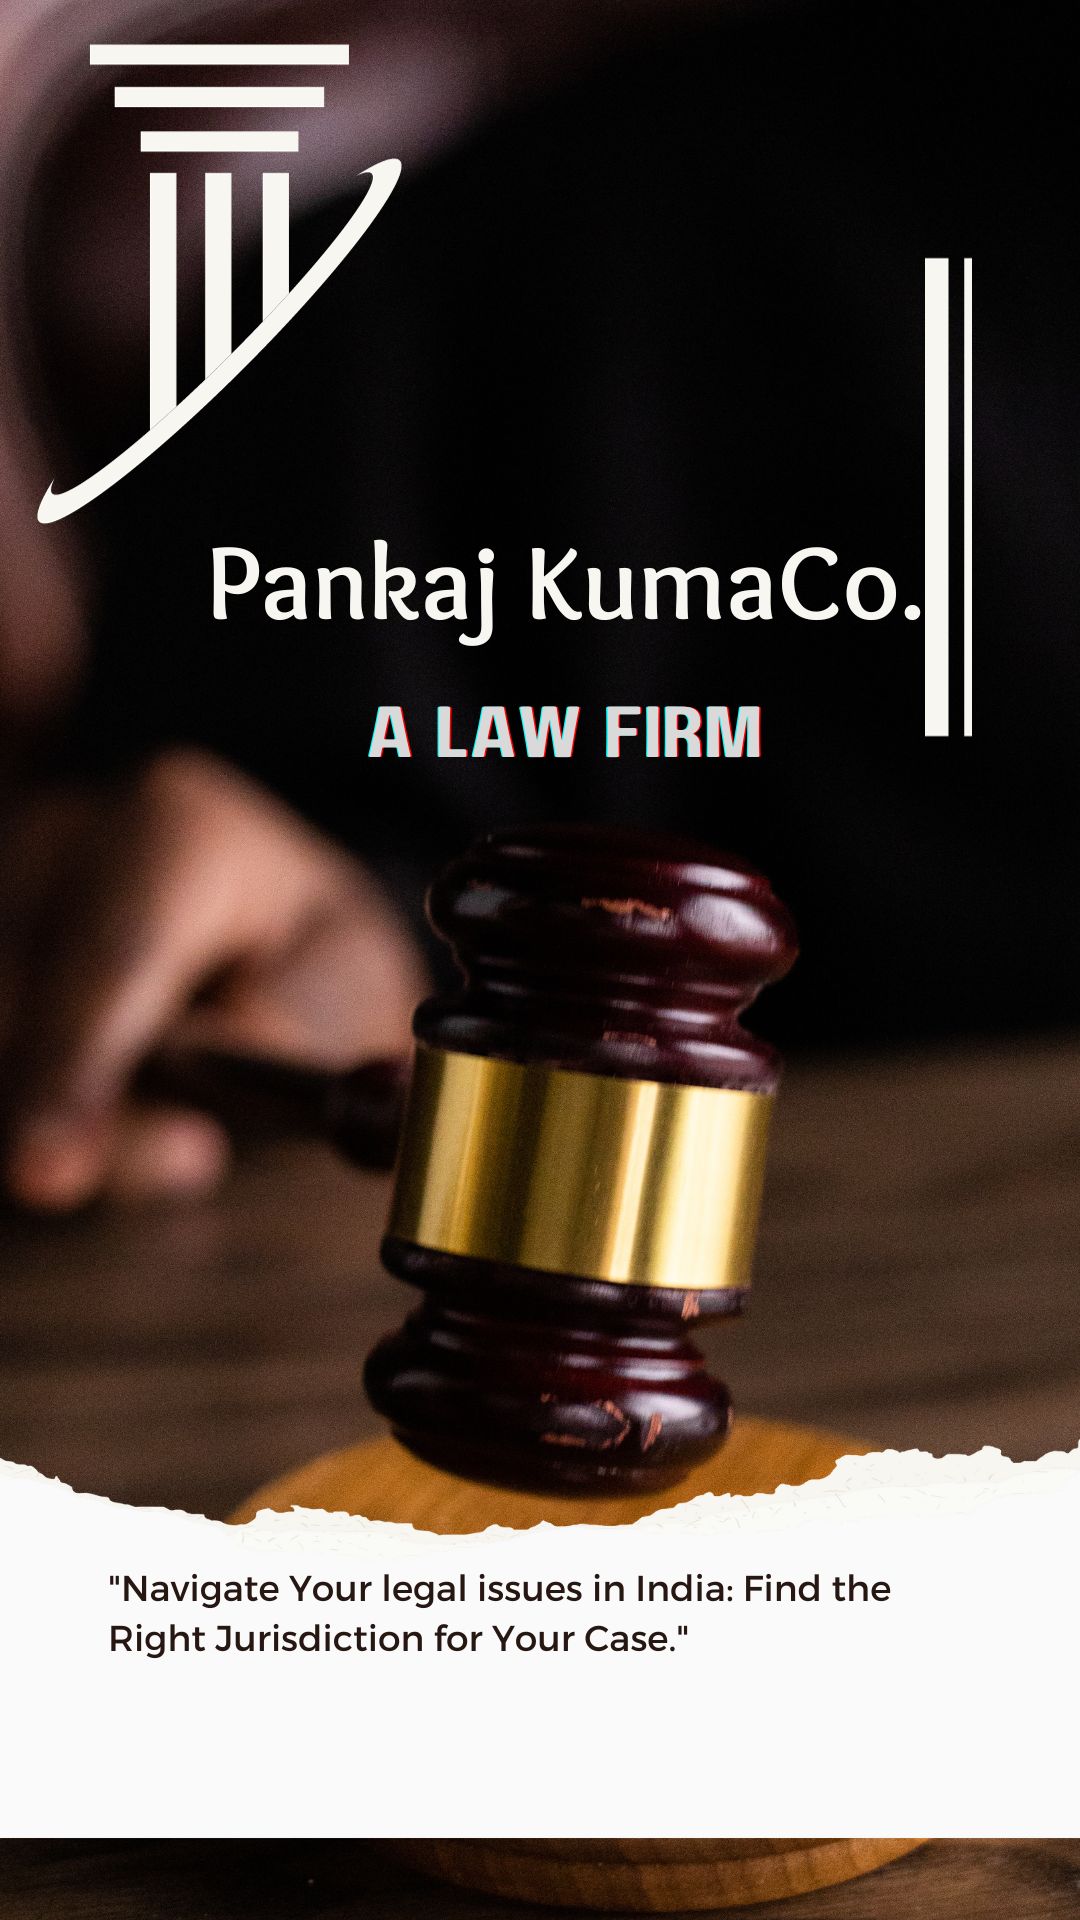 Best lawyer for legal issues Pankaj Kumar & Co.